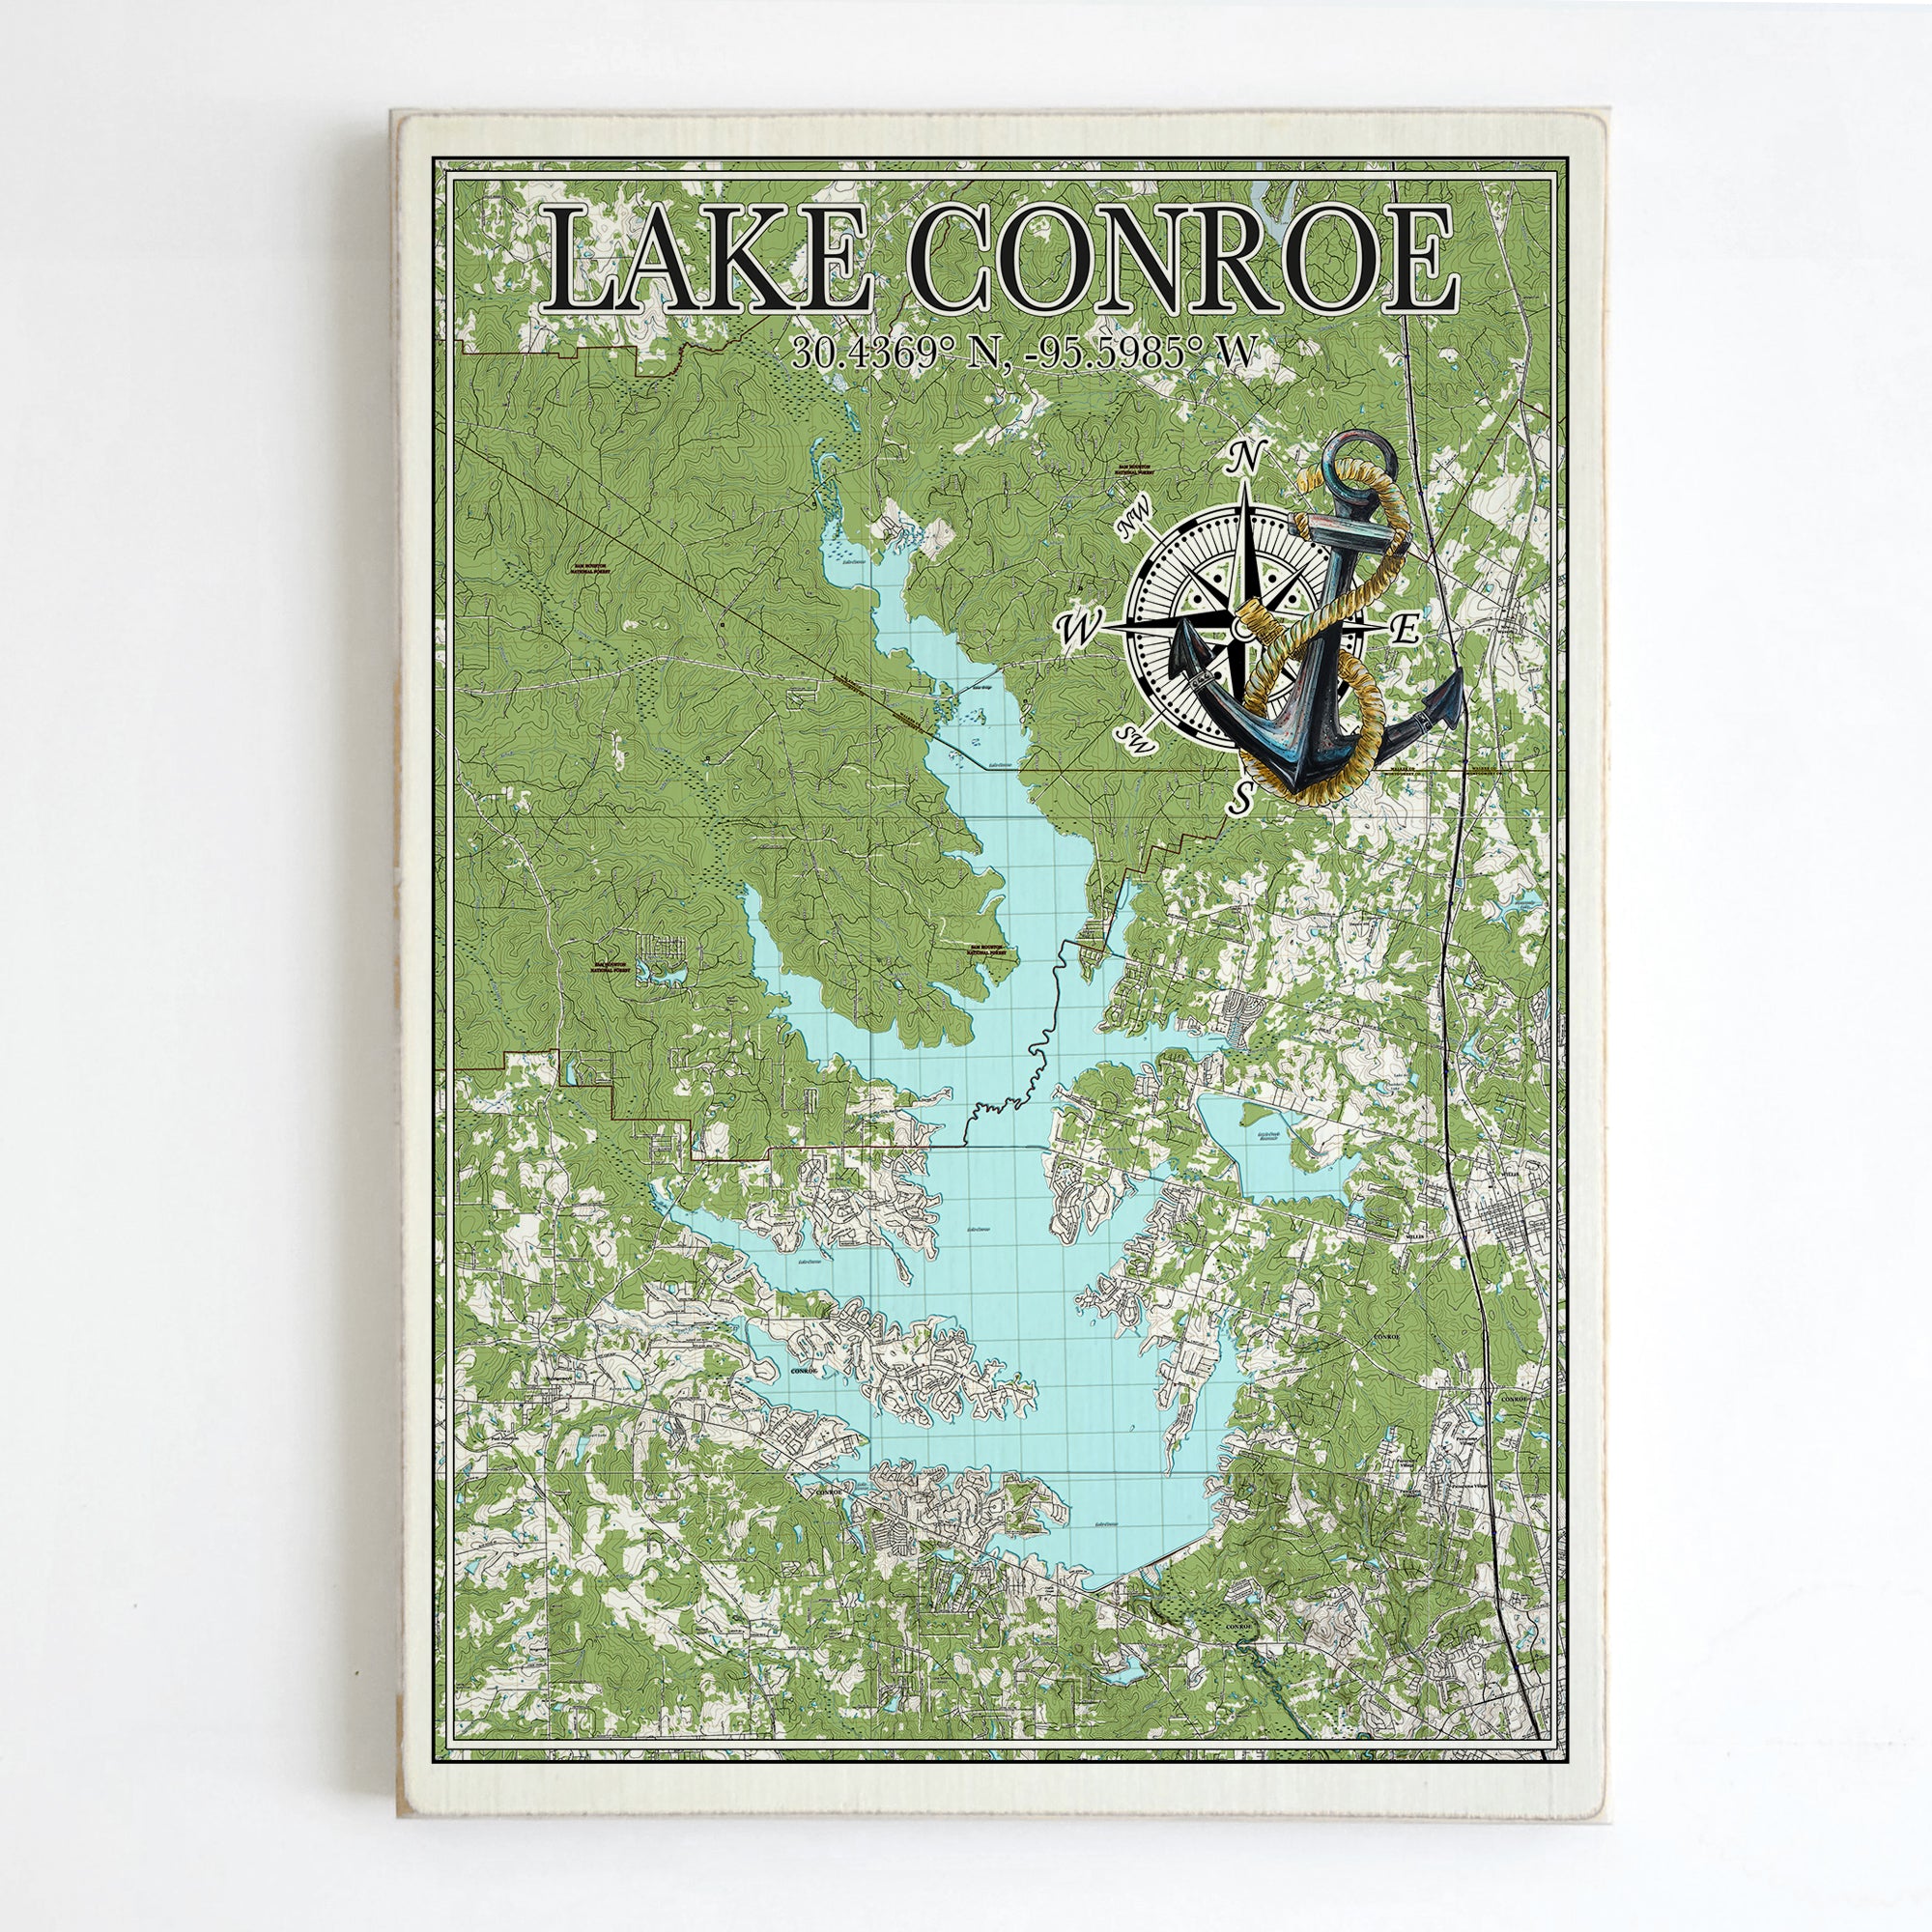 Lake Conroe, TX  Anchor Plank Map